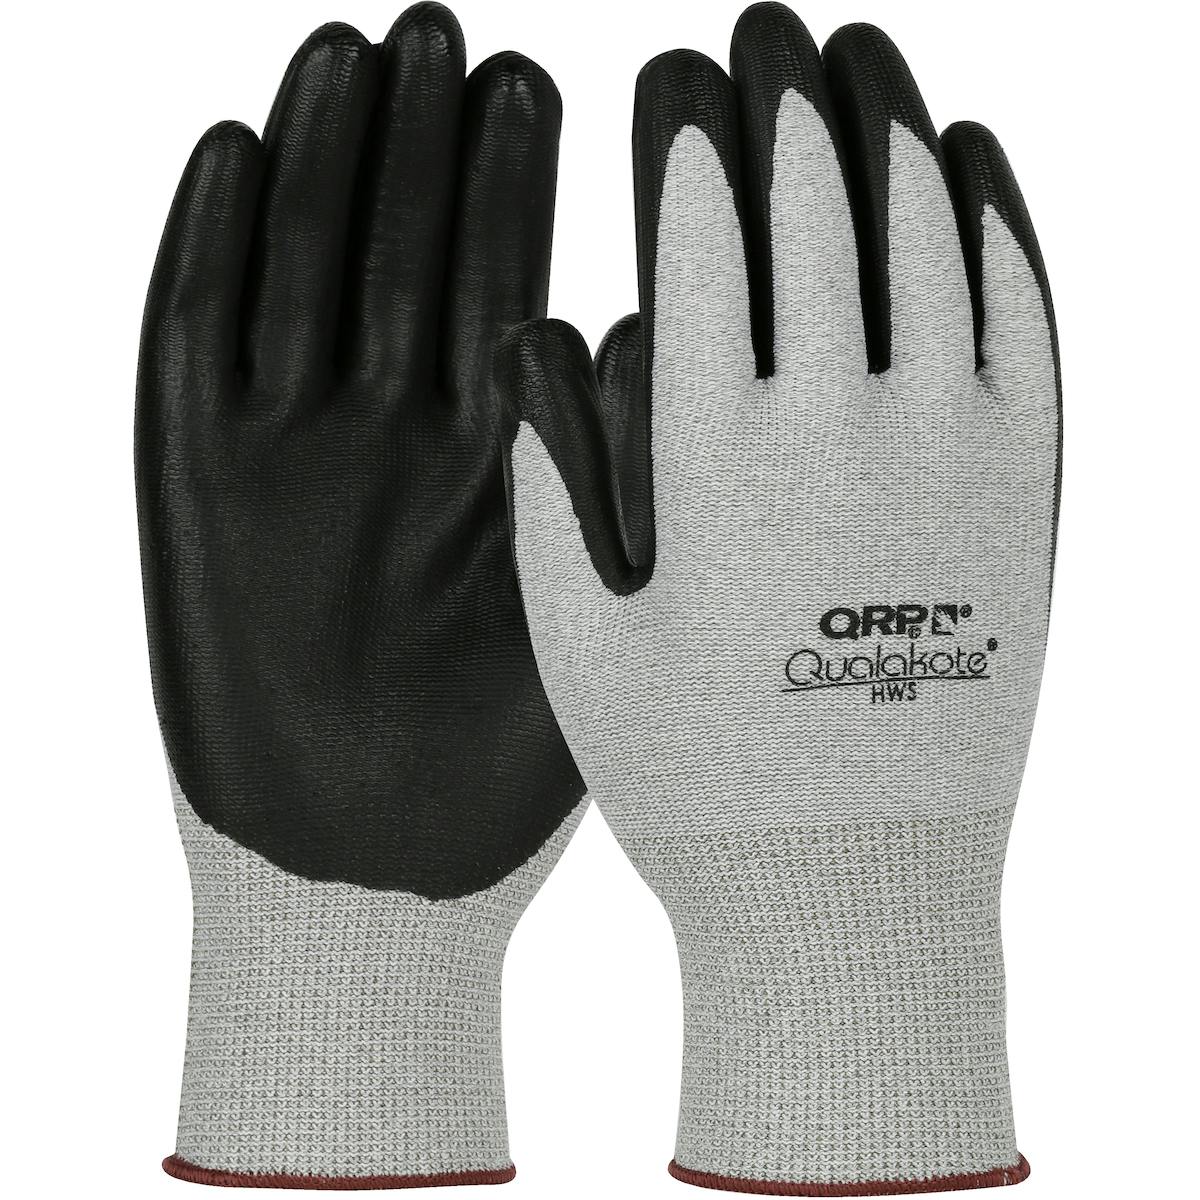 QRP® Qualakote® Seamless Knit Nylon/Carbon Fiber with Nitrile Foam Grip (HWS)